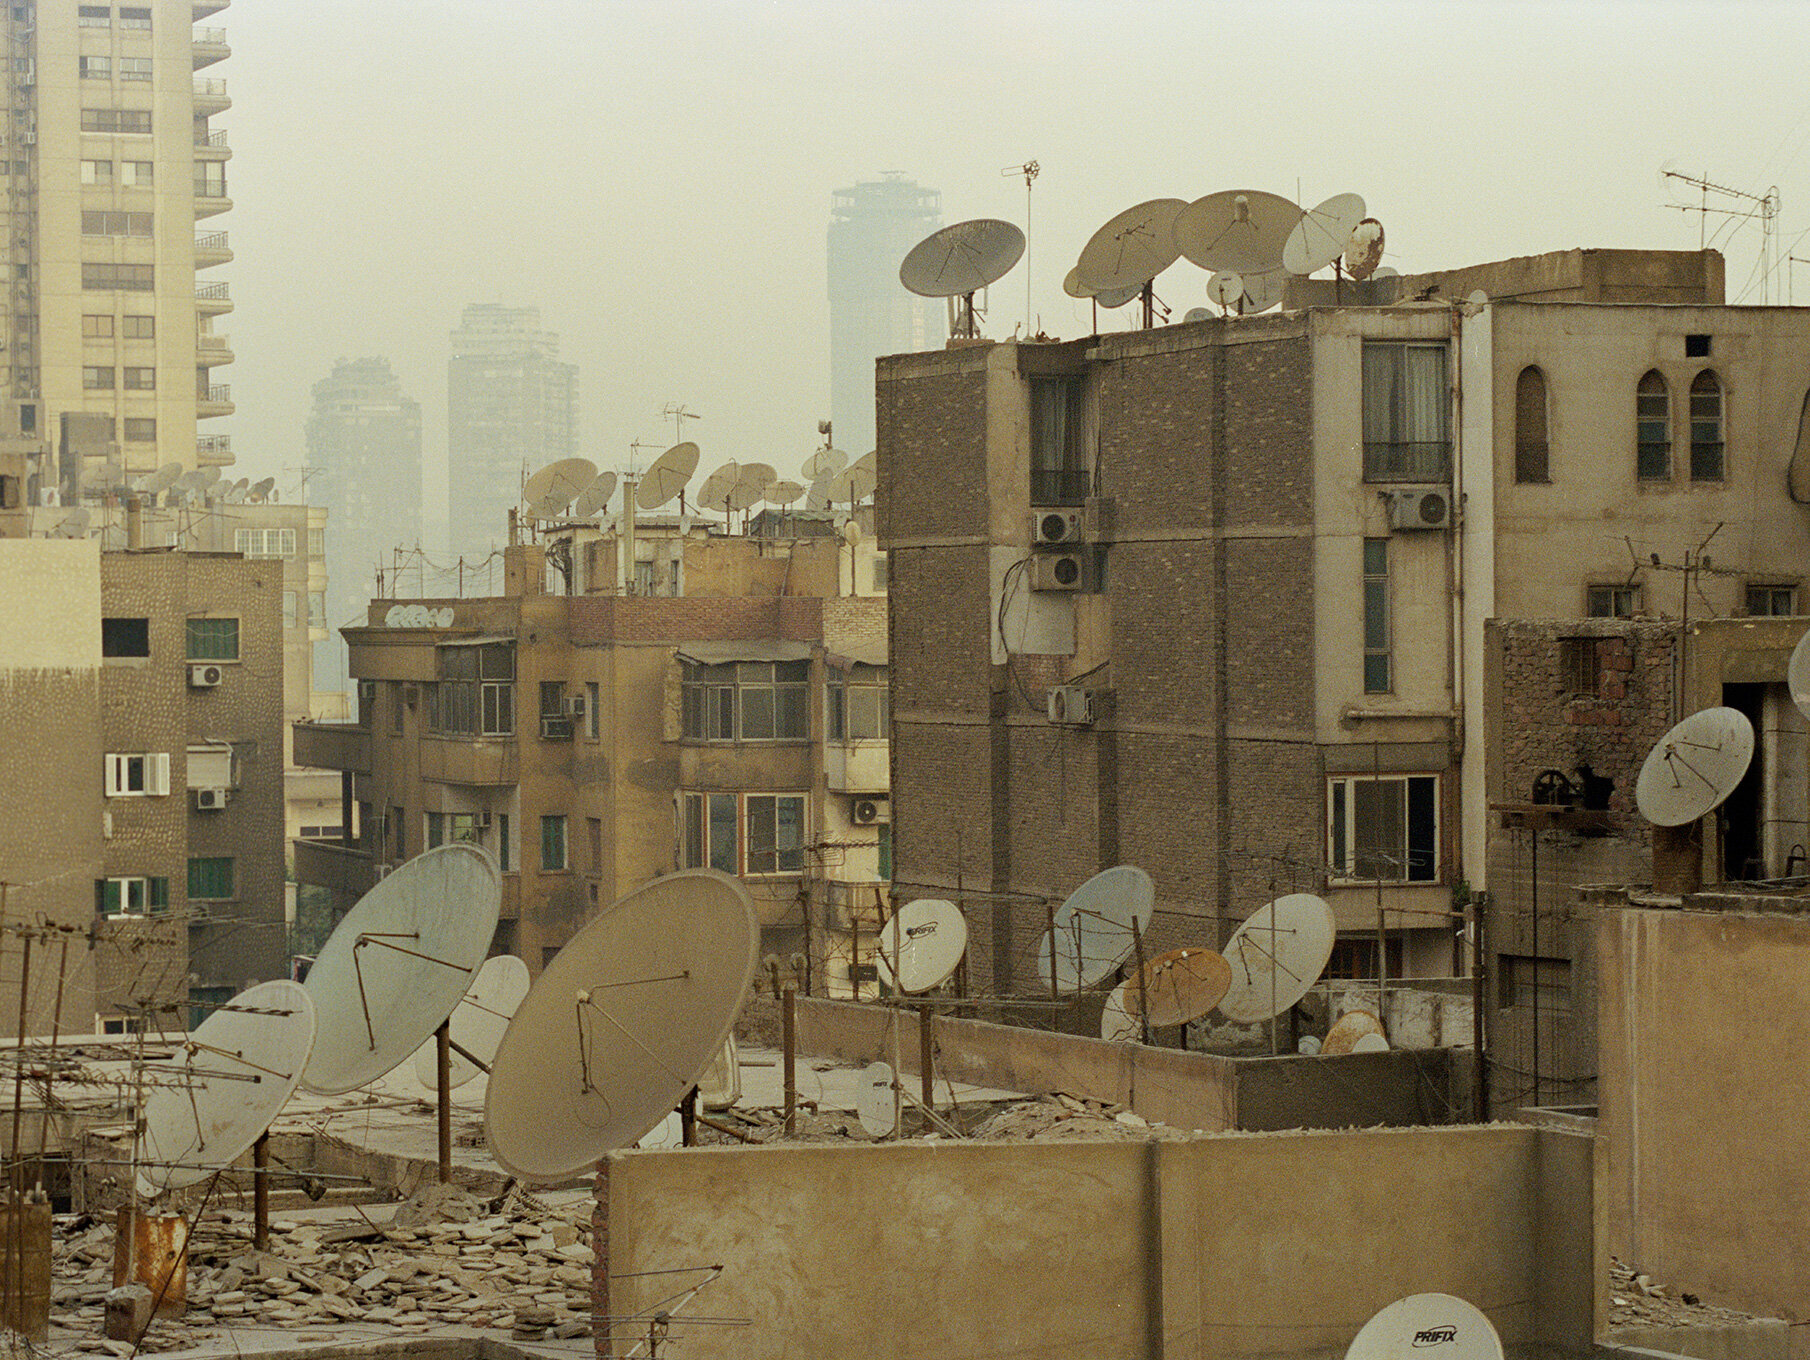   Downtown, Study I,  il Cairo, Egypt, 2013  